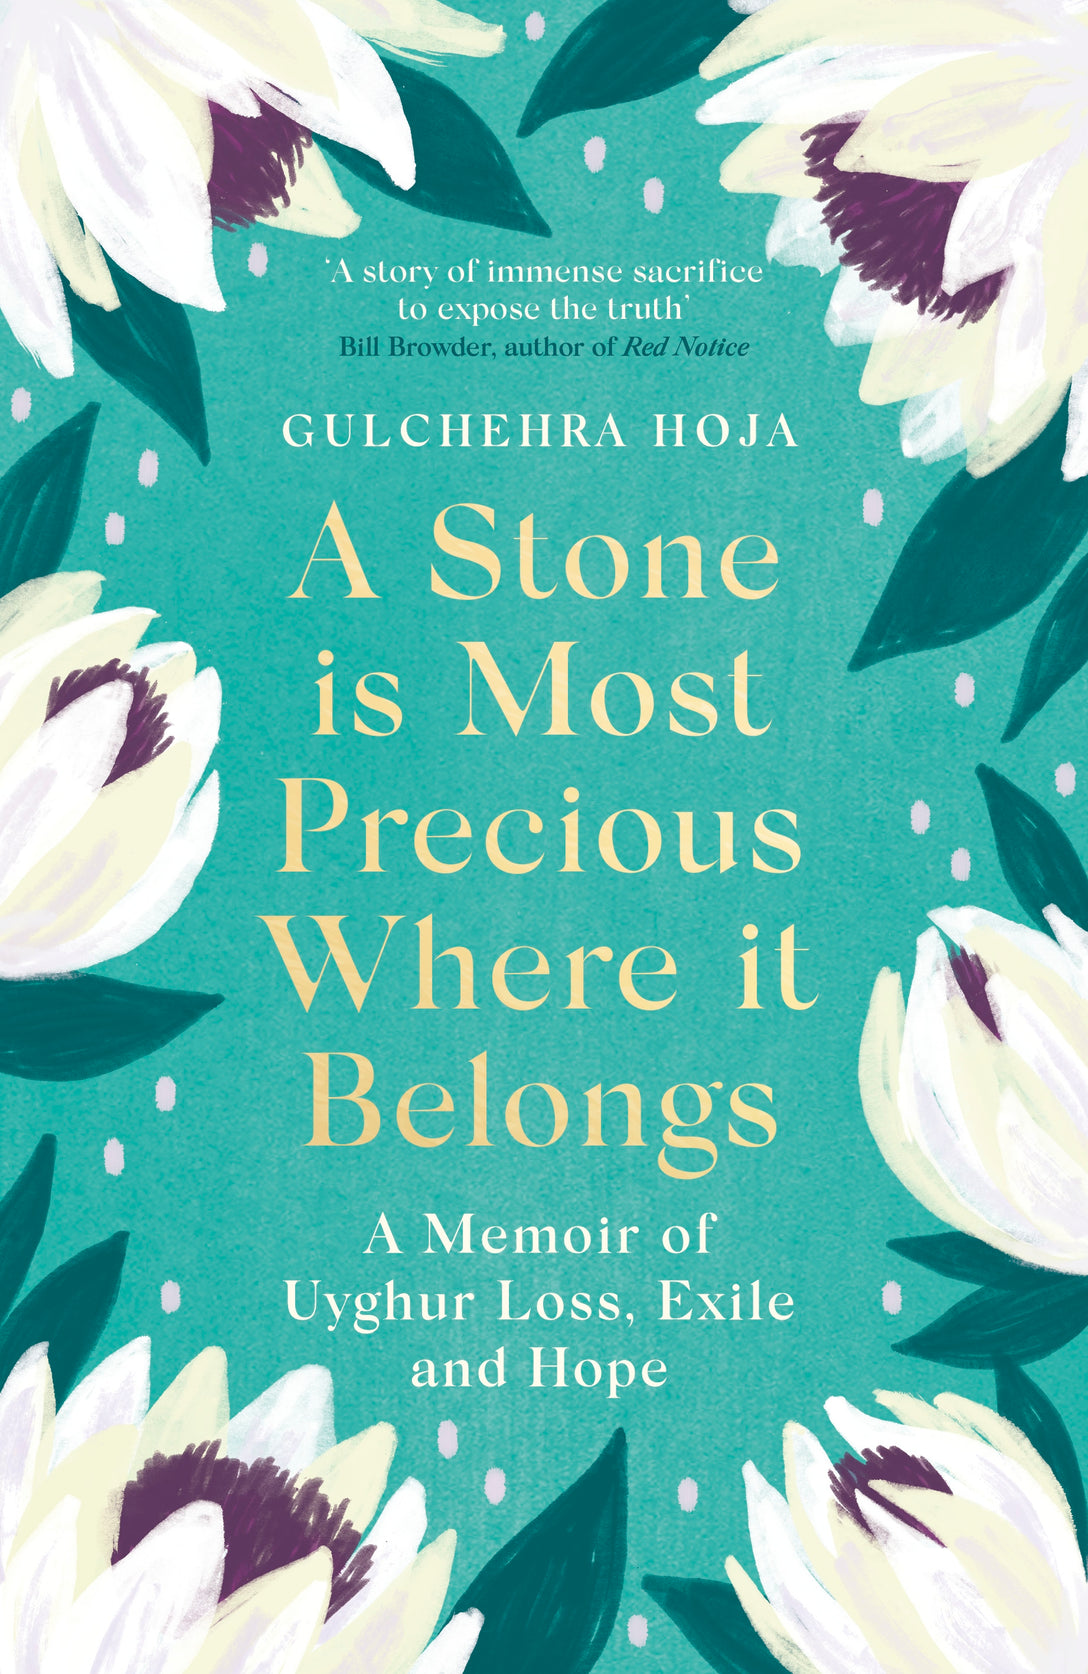 A Stone is Most Precious Where It Belongs by Gulchehra Hoja